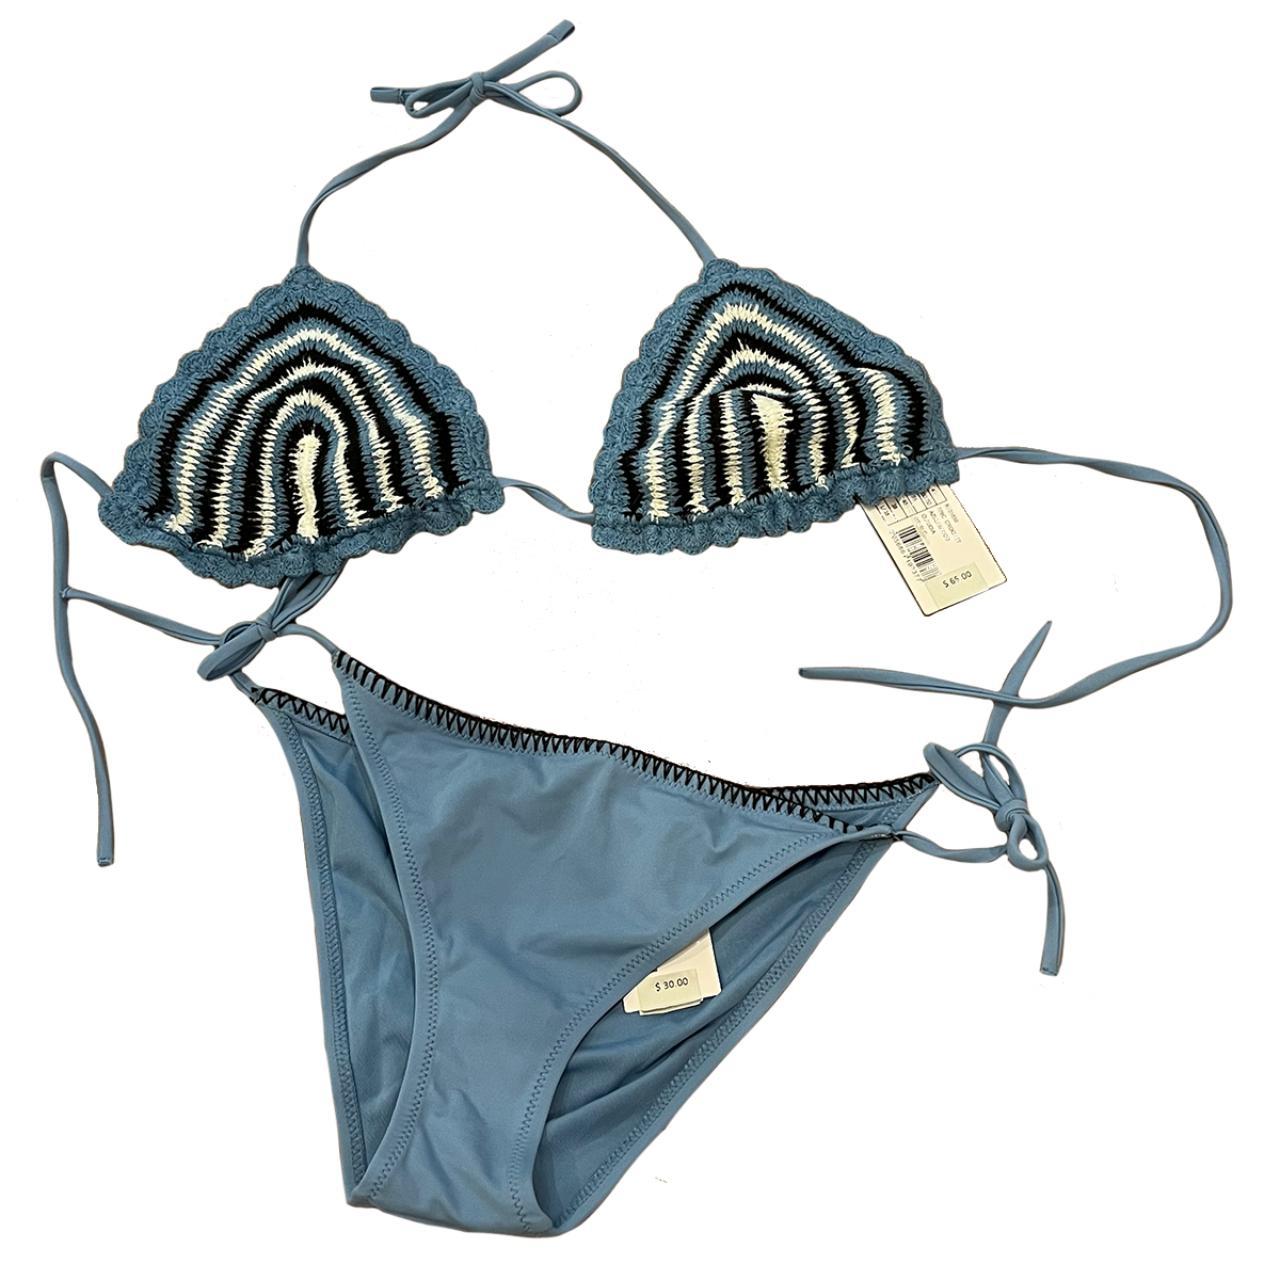 Calzedonia Women's Blue Bikinis-and-tankini-sets